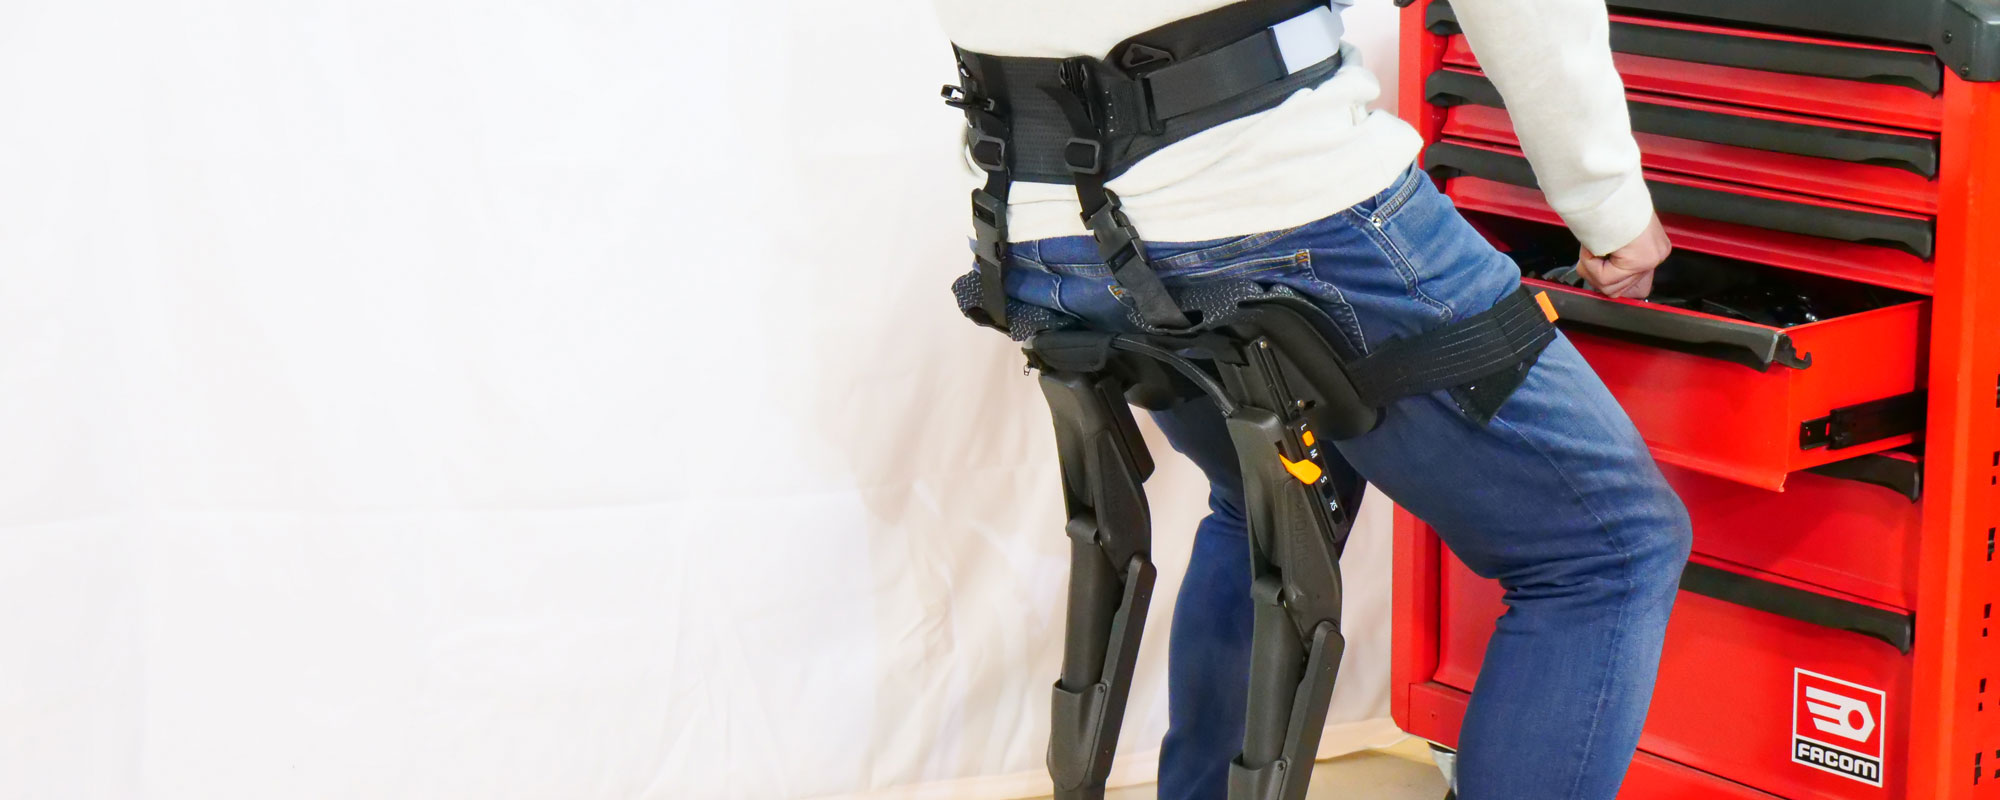 IP14 - exosquelette posture assis debout - GOBIO